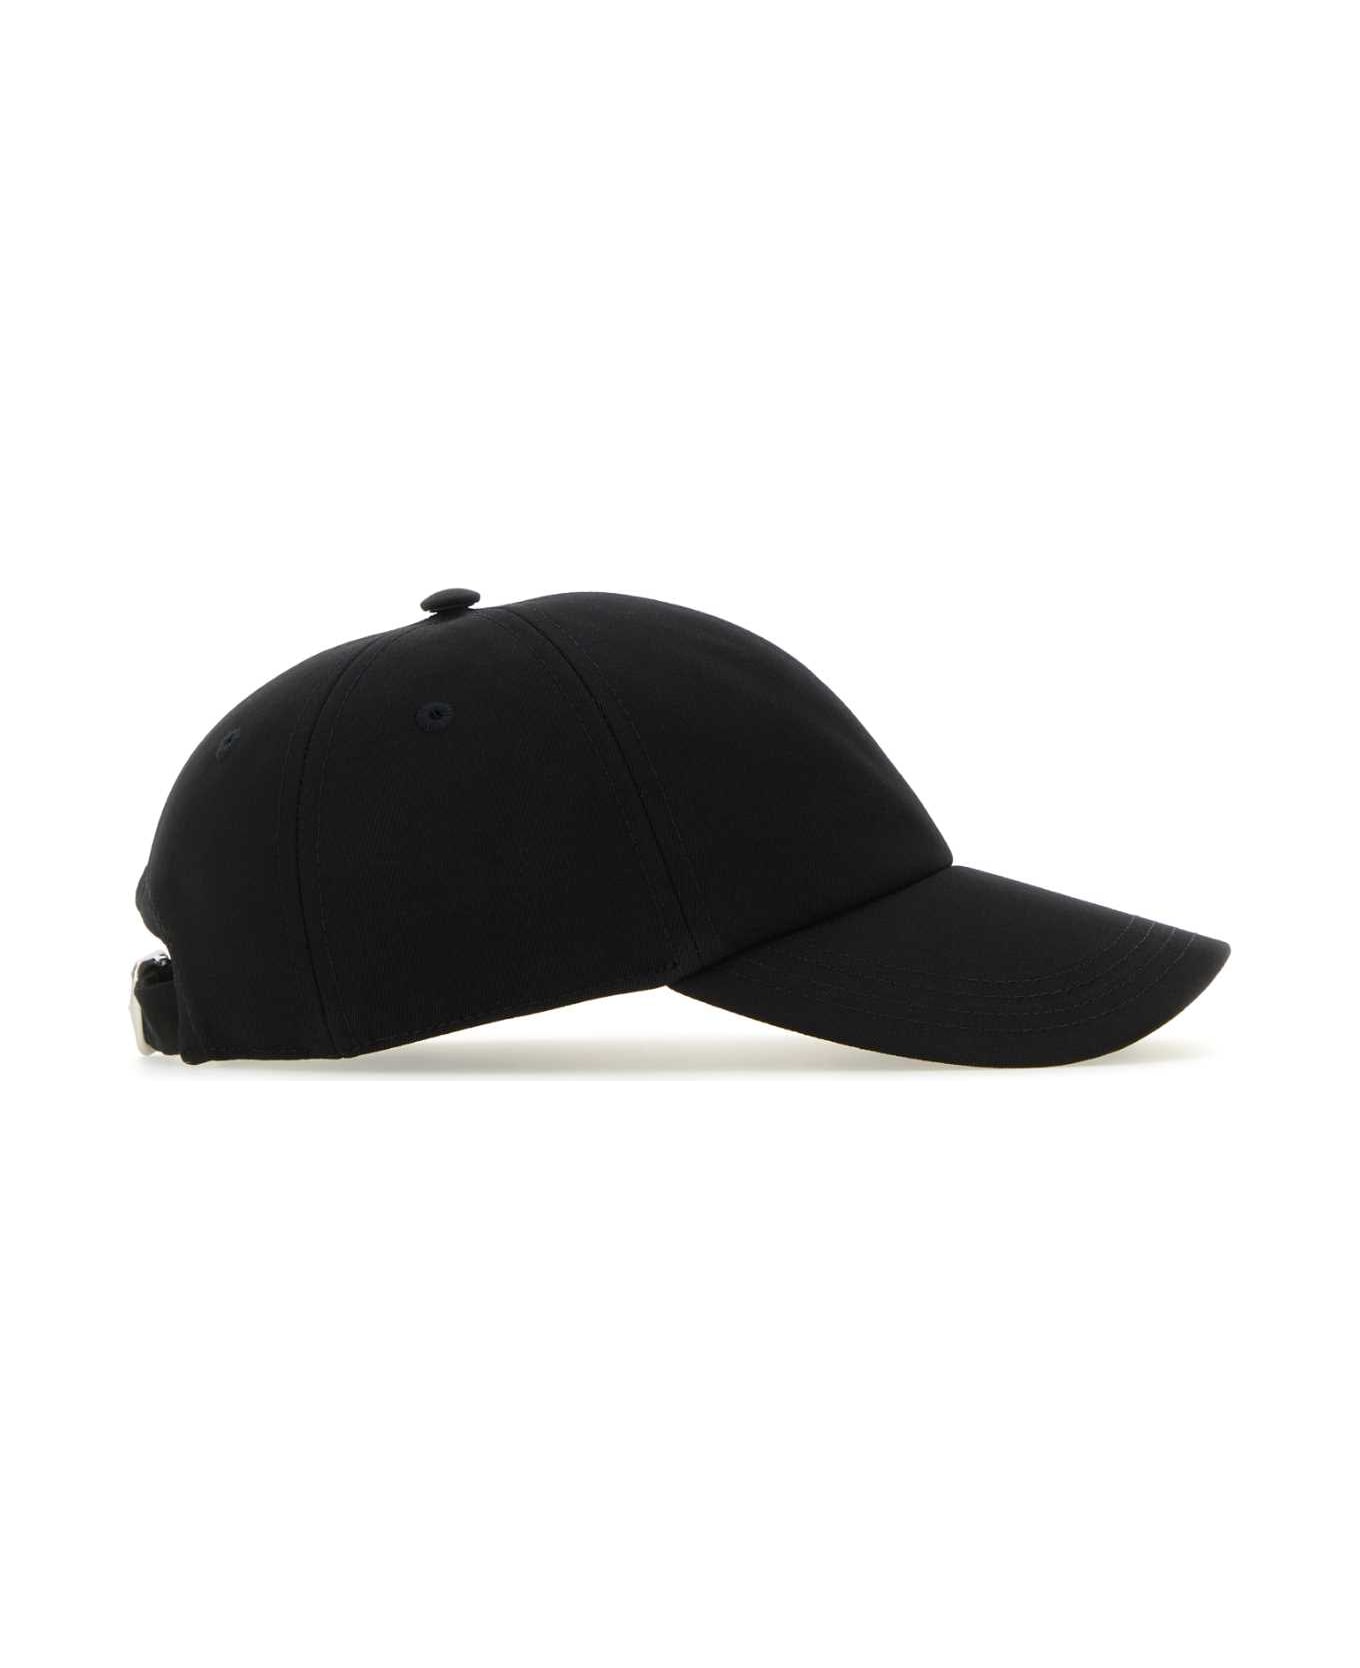 Burberry Black Polyester Blend Baseball Cap - BLACK ヘアアクセサリー